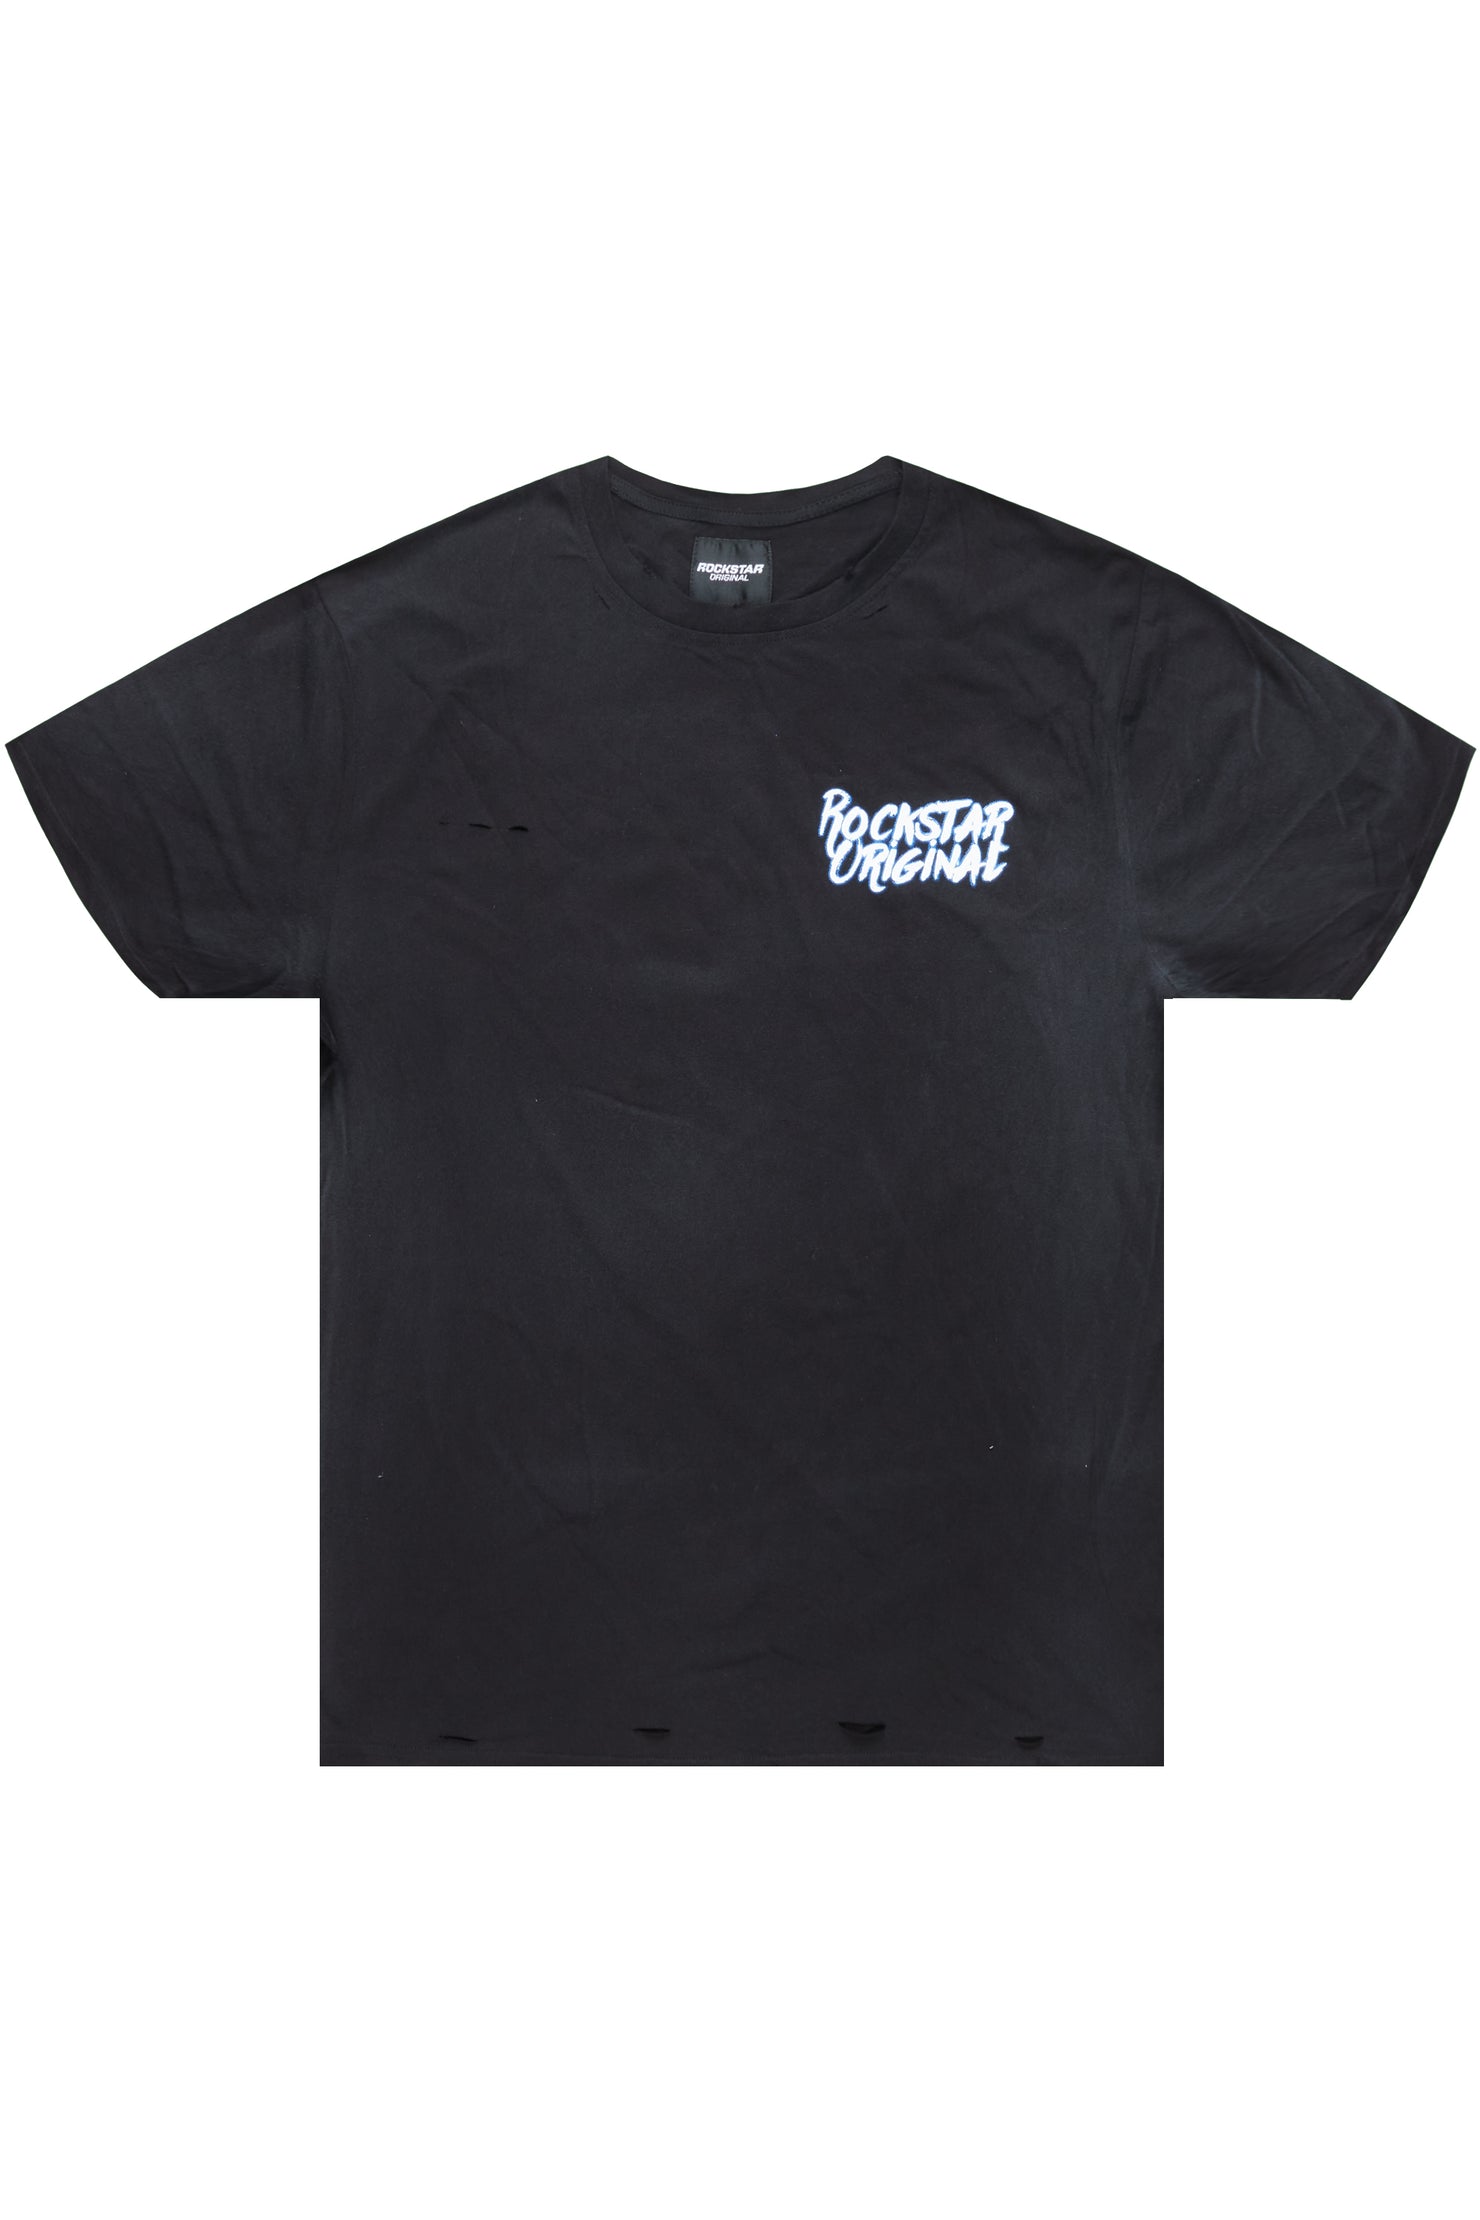 Plaeboy Black Graphic T-Shirt